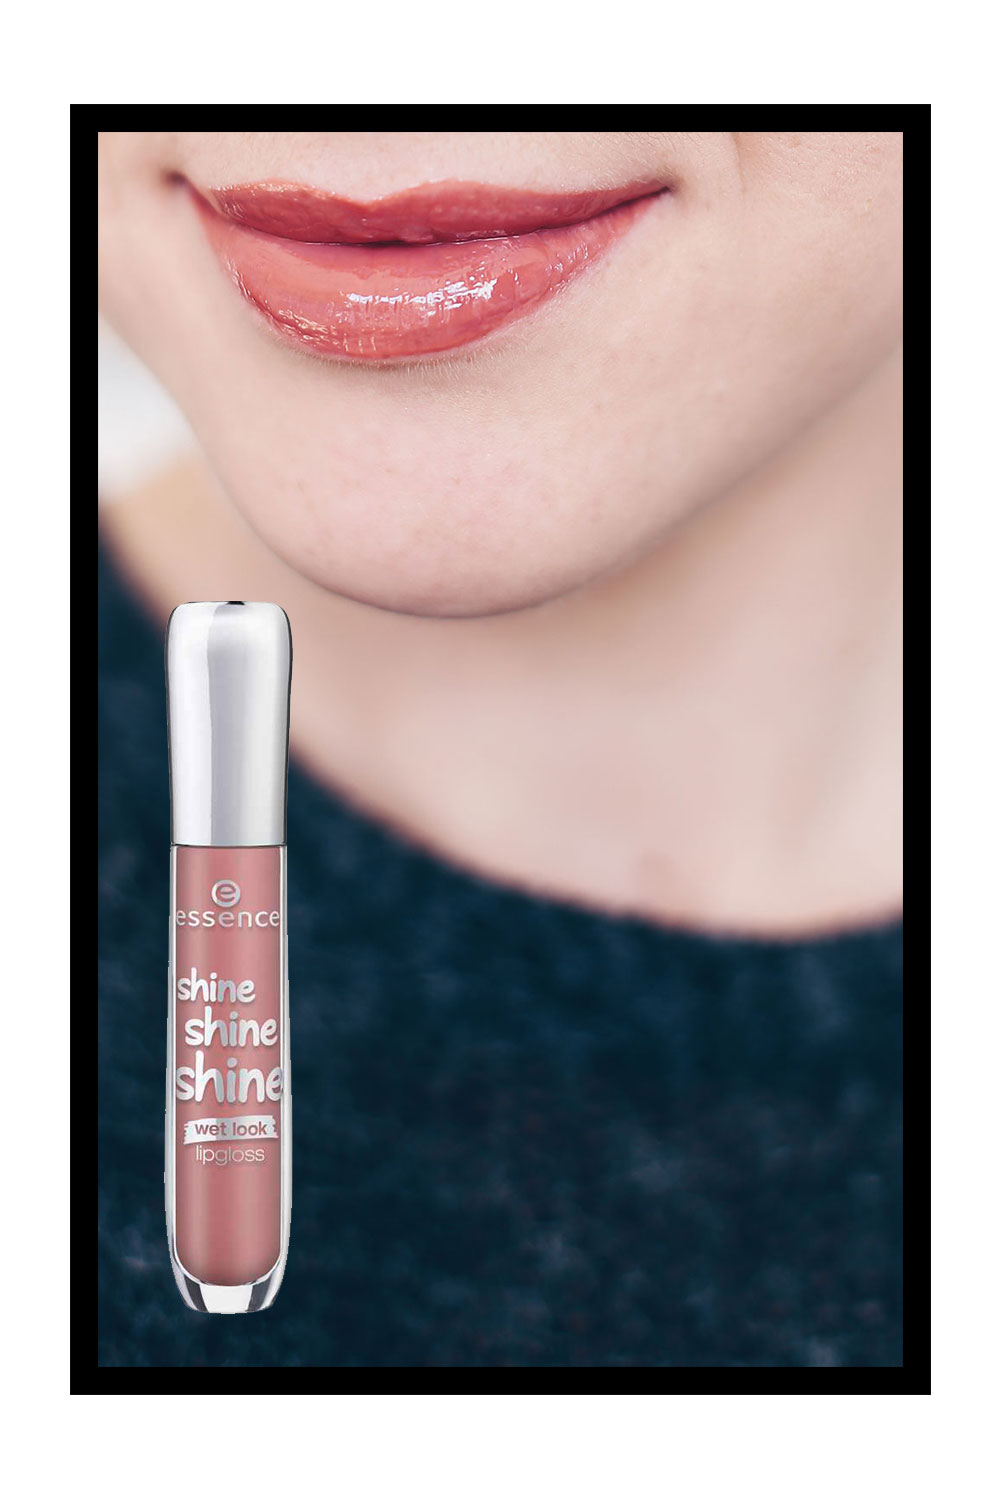 essence shine shine shine lipgloss, Review, Erfahrungsbericht, Beautyblog, Produkttest, Beauty Magazin, whoismocca.com